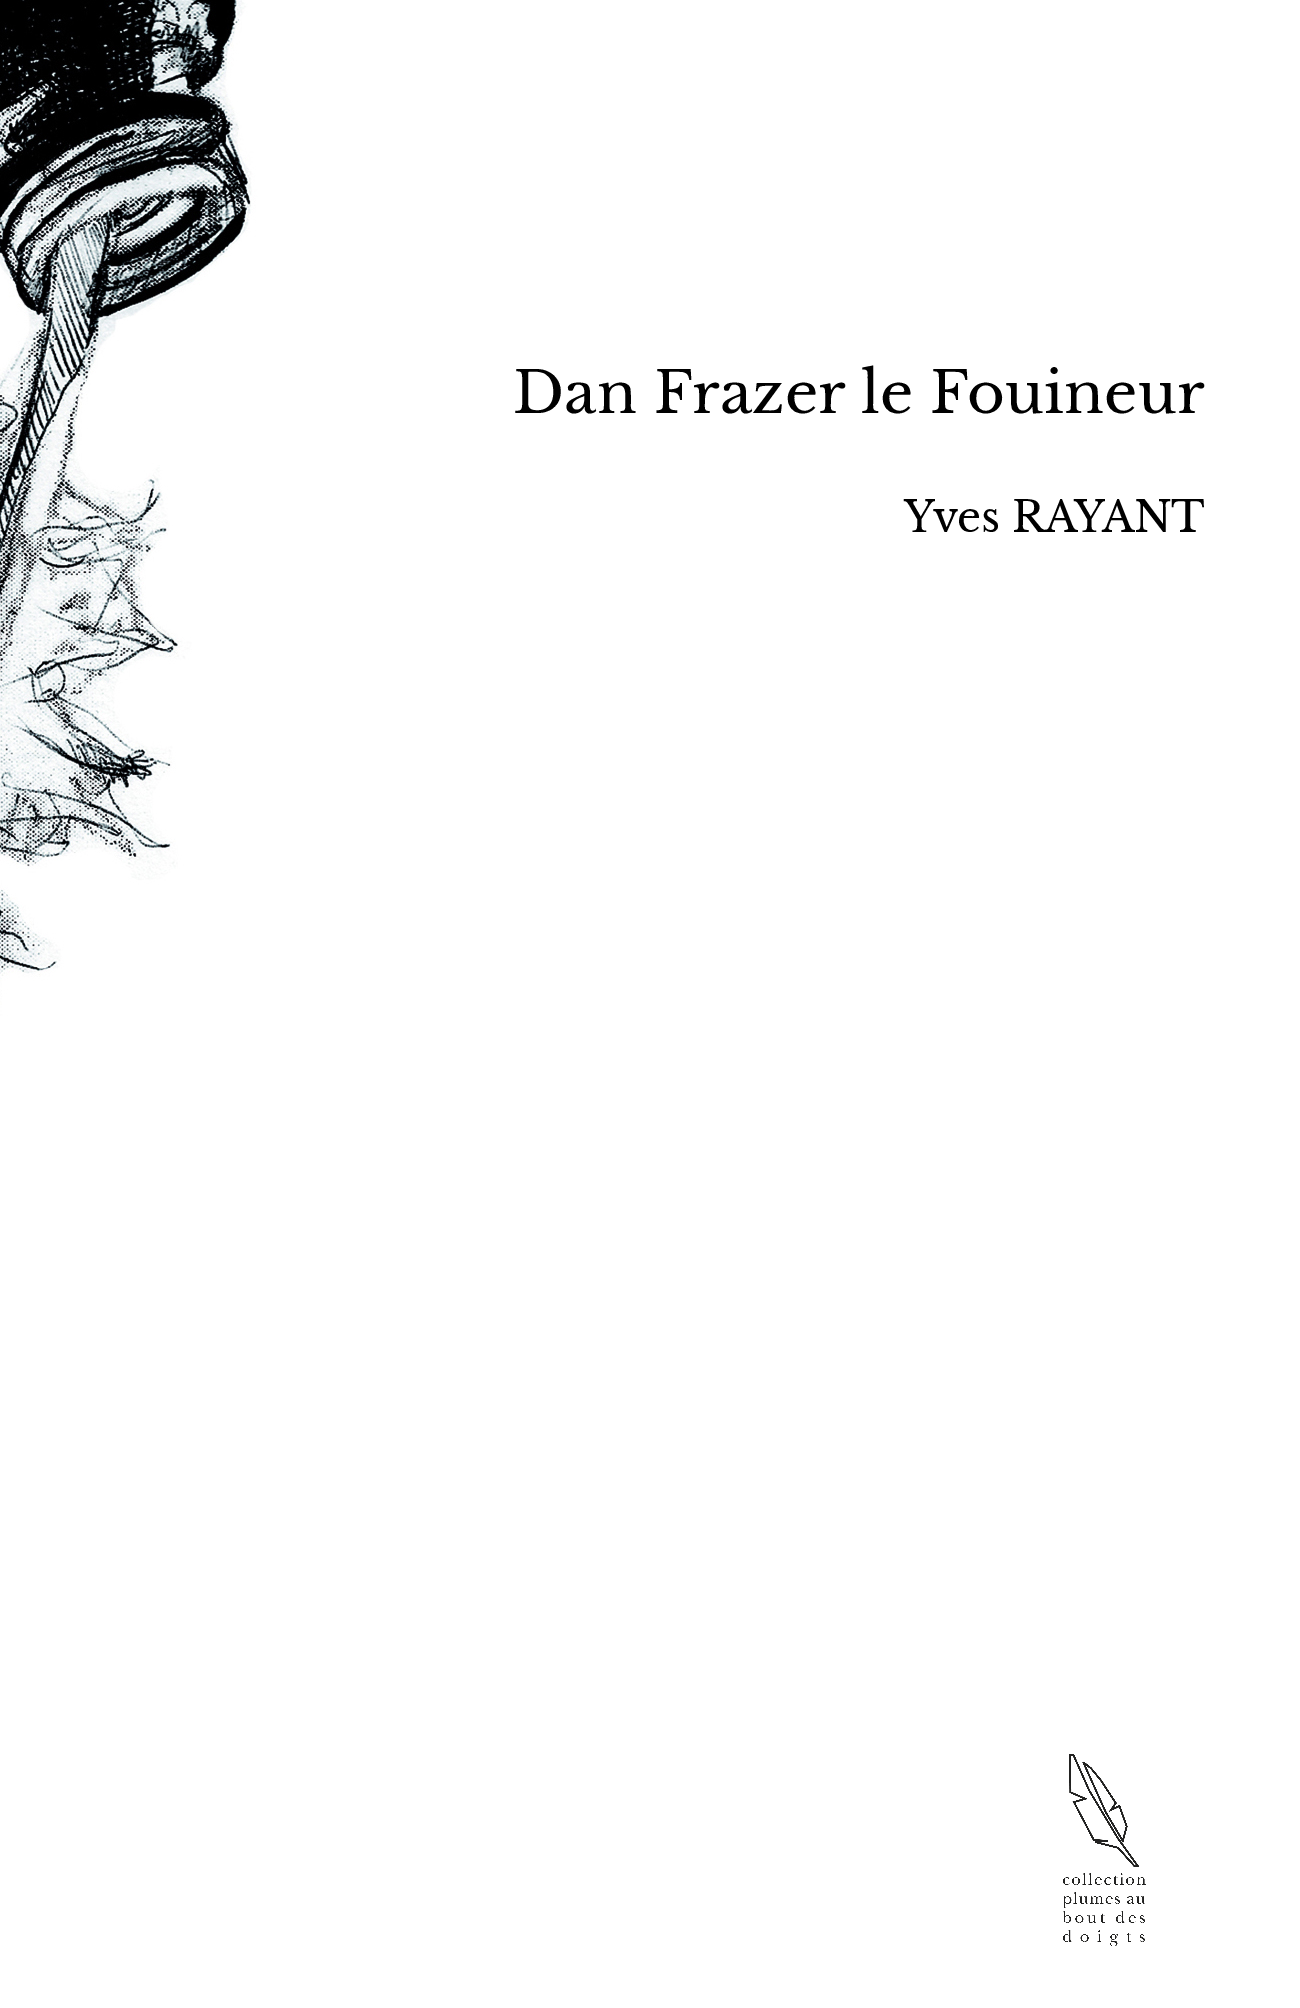 Dan Frazer le Fouineur